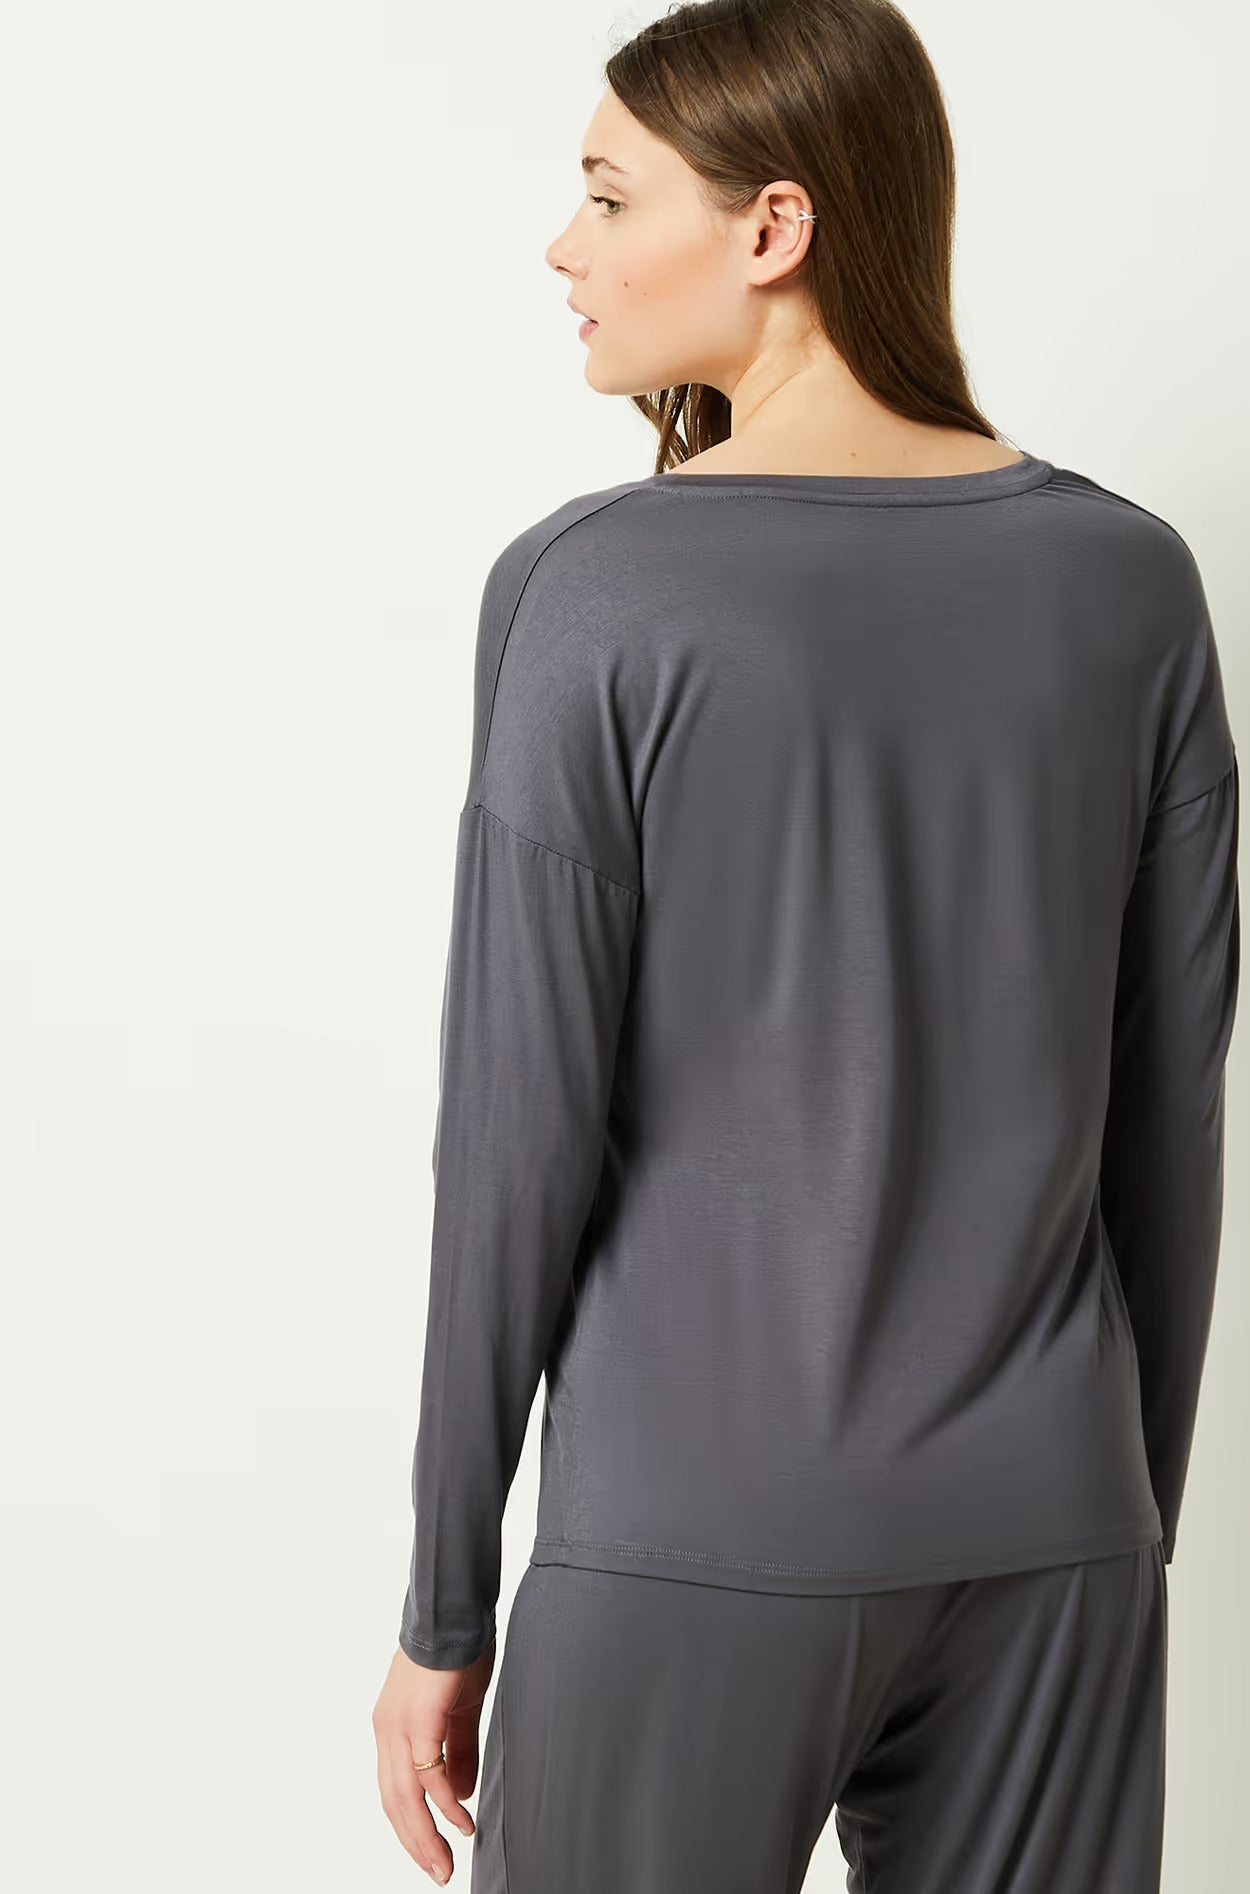 ETAM - חולצת פיג'מה ארוכה MODY SPE בצבע אפור כהה - MASHBIR//365